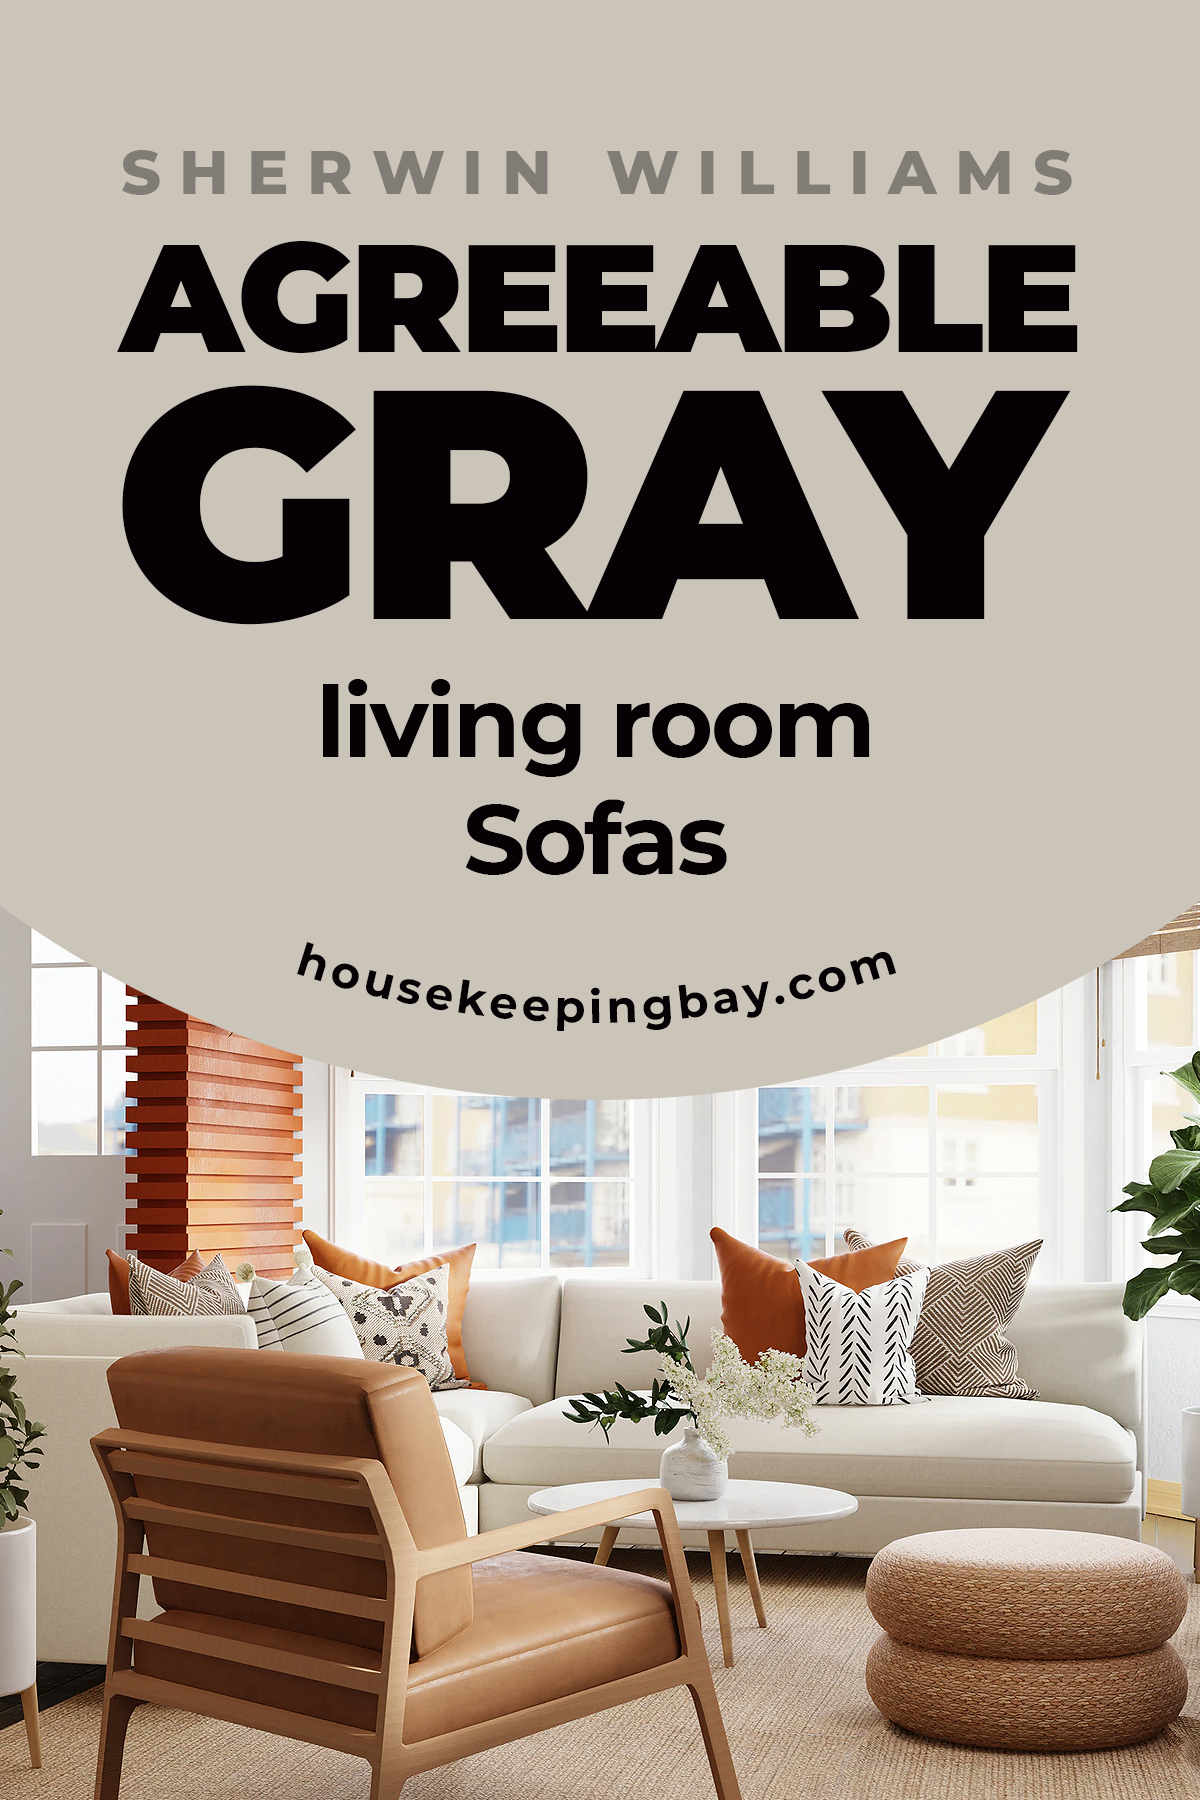 Agreeable Gray living room Sofas